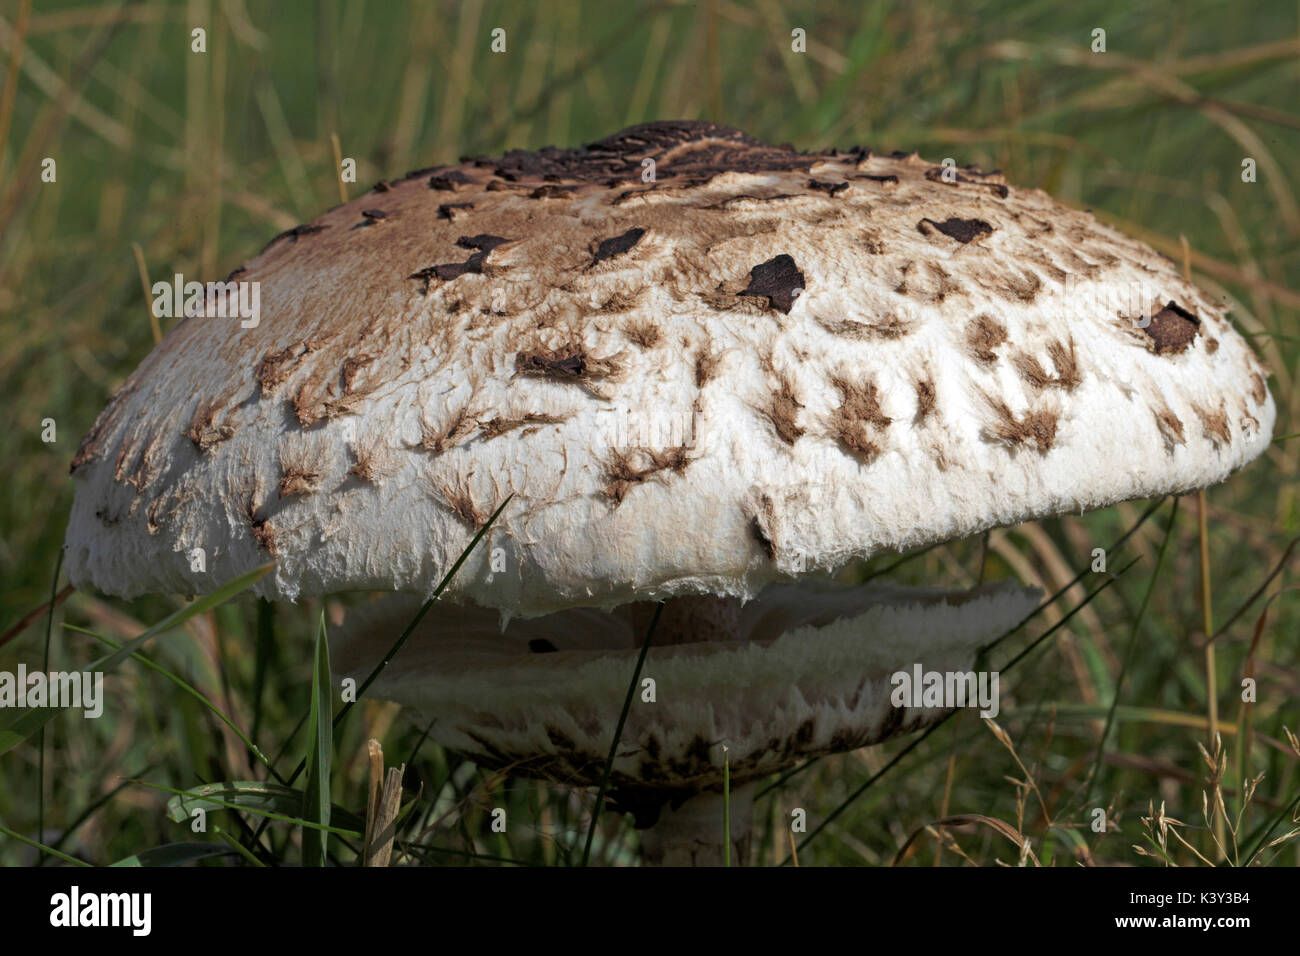 Shaggy parasol mushroom with white gills, macrolepiota rhacodes Stock Photo